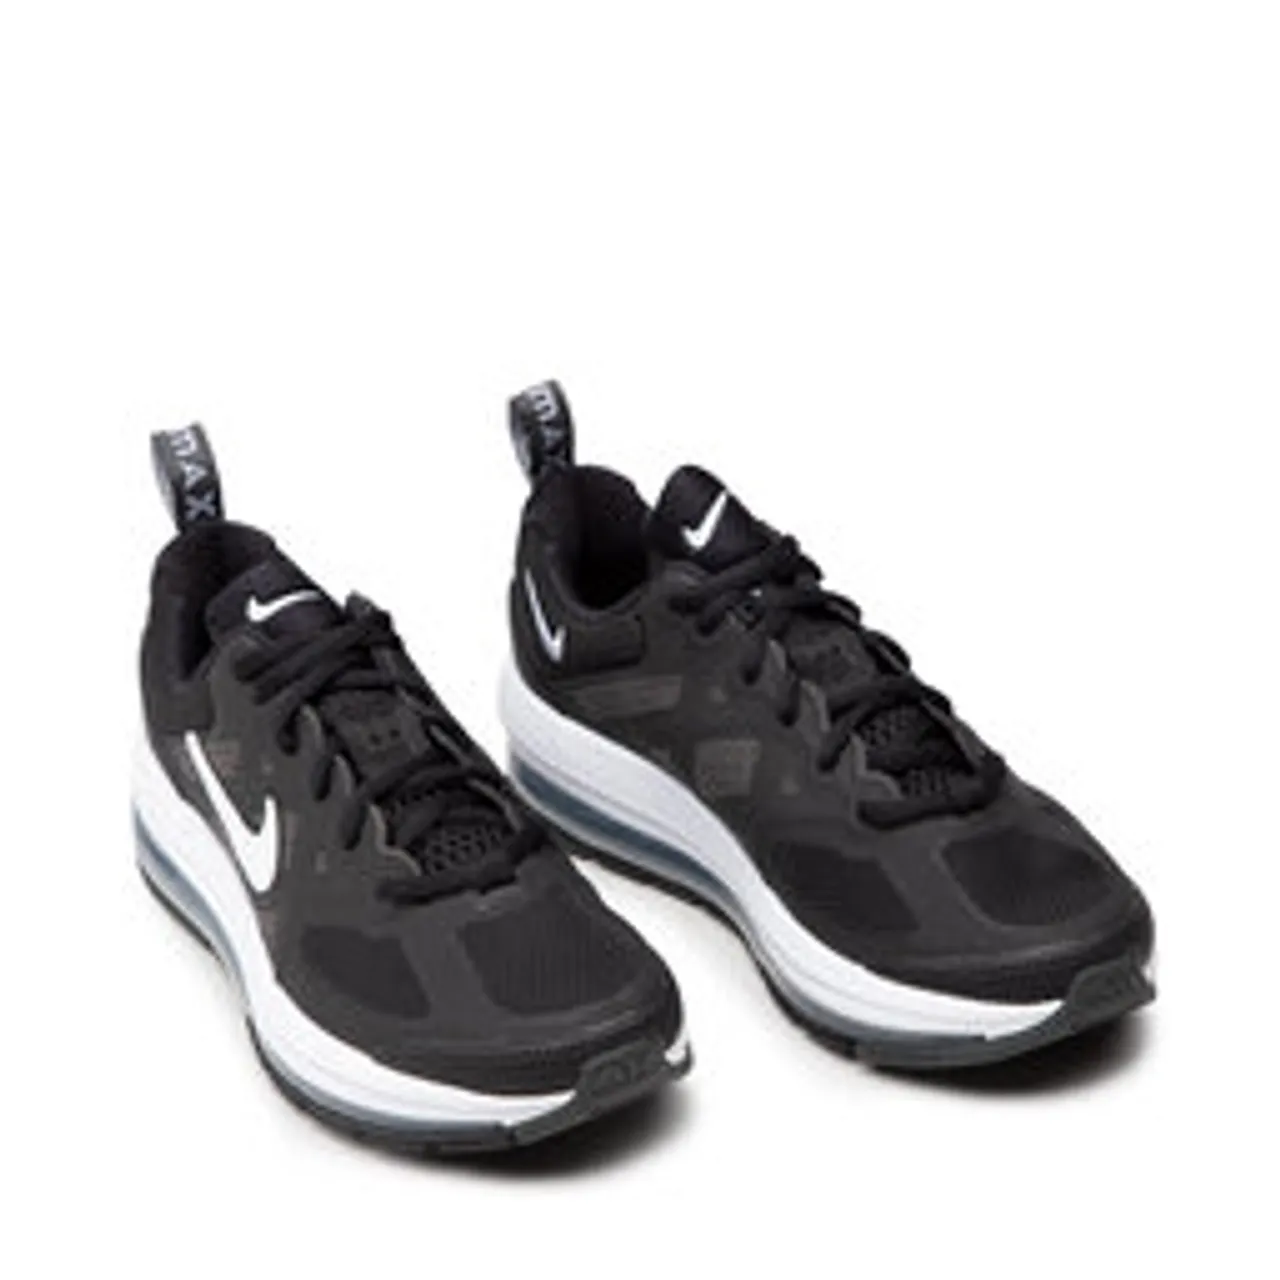 Schuhe Nike Air Max Genome (Gs) CZ4652 003 Black/White/Anthracite